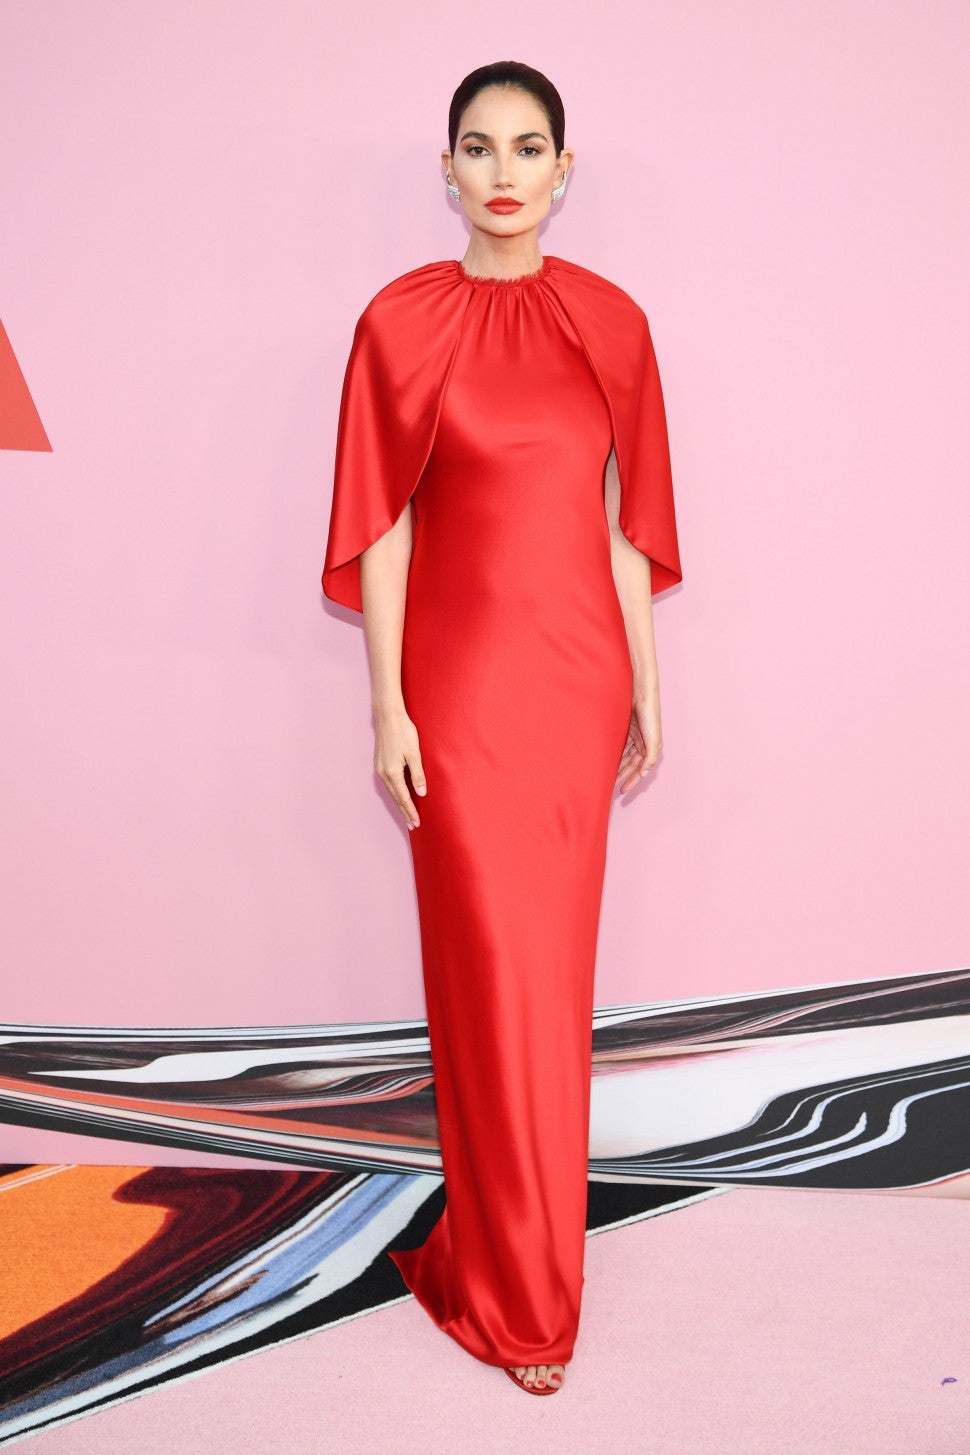 Lily Aldridge at 2019 CFDA Fashion Awards